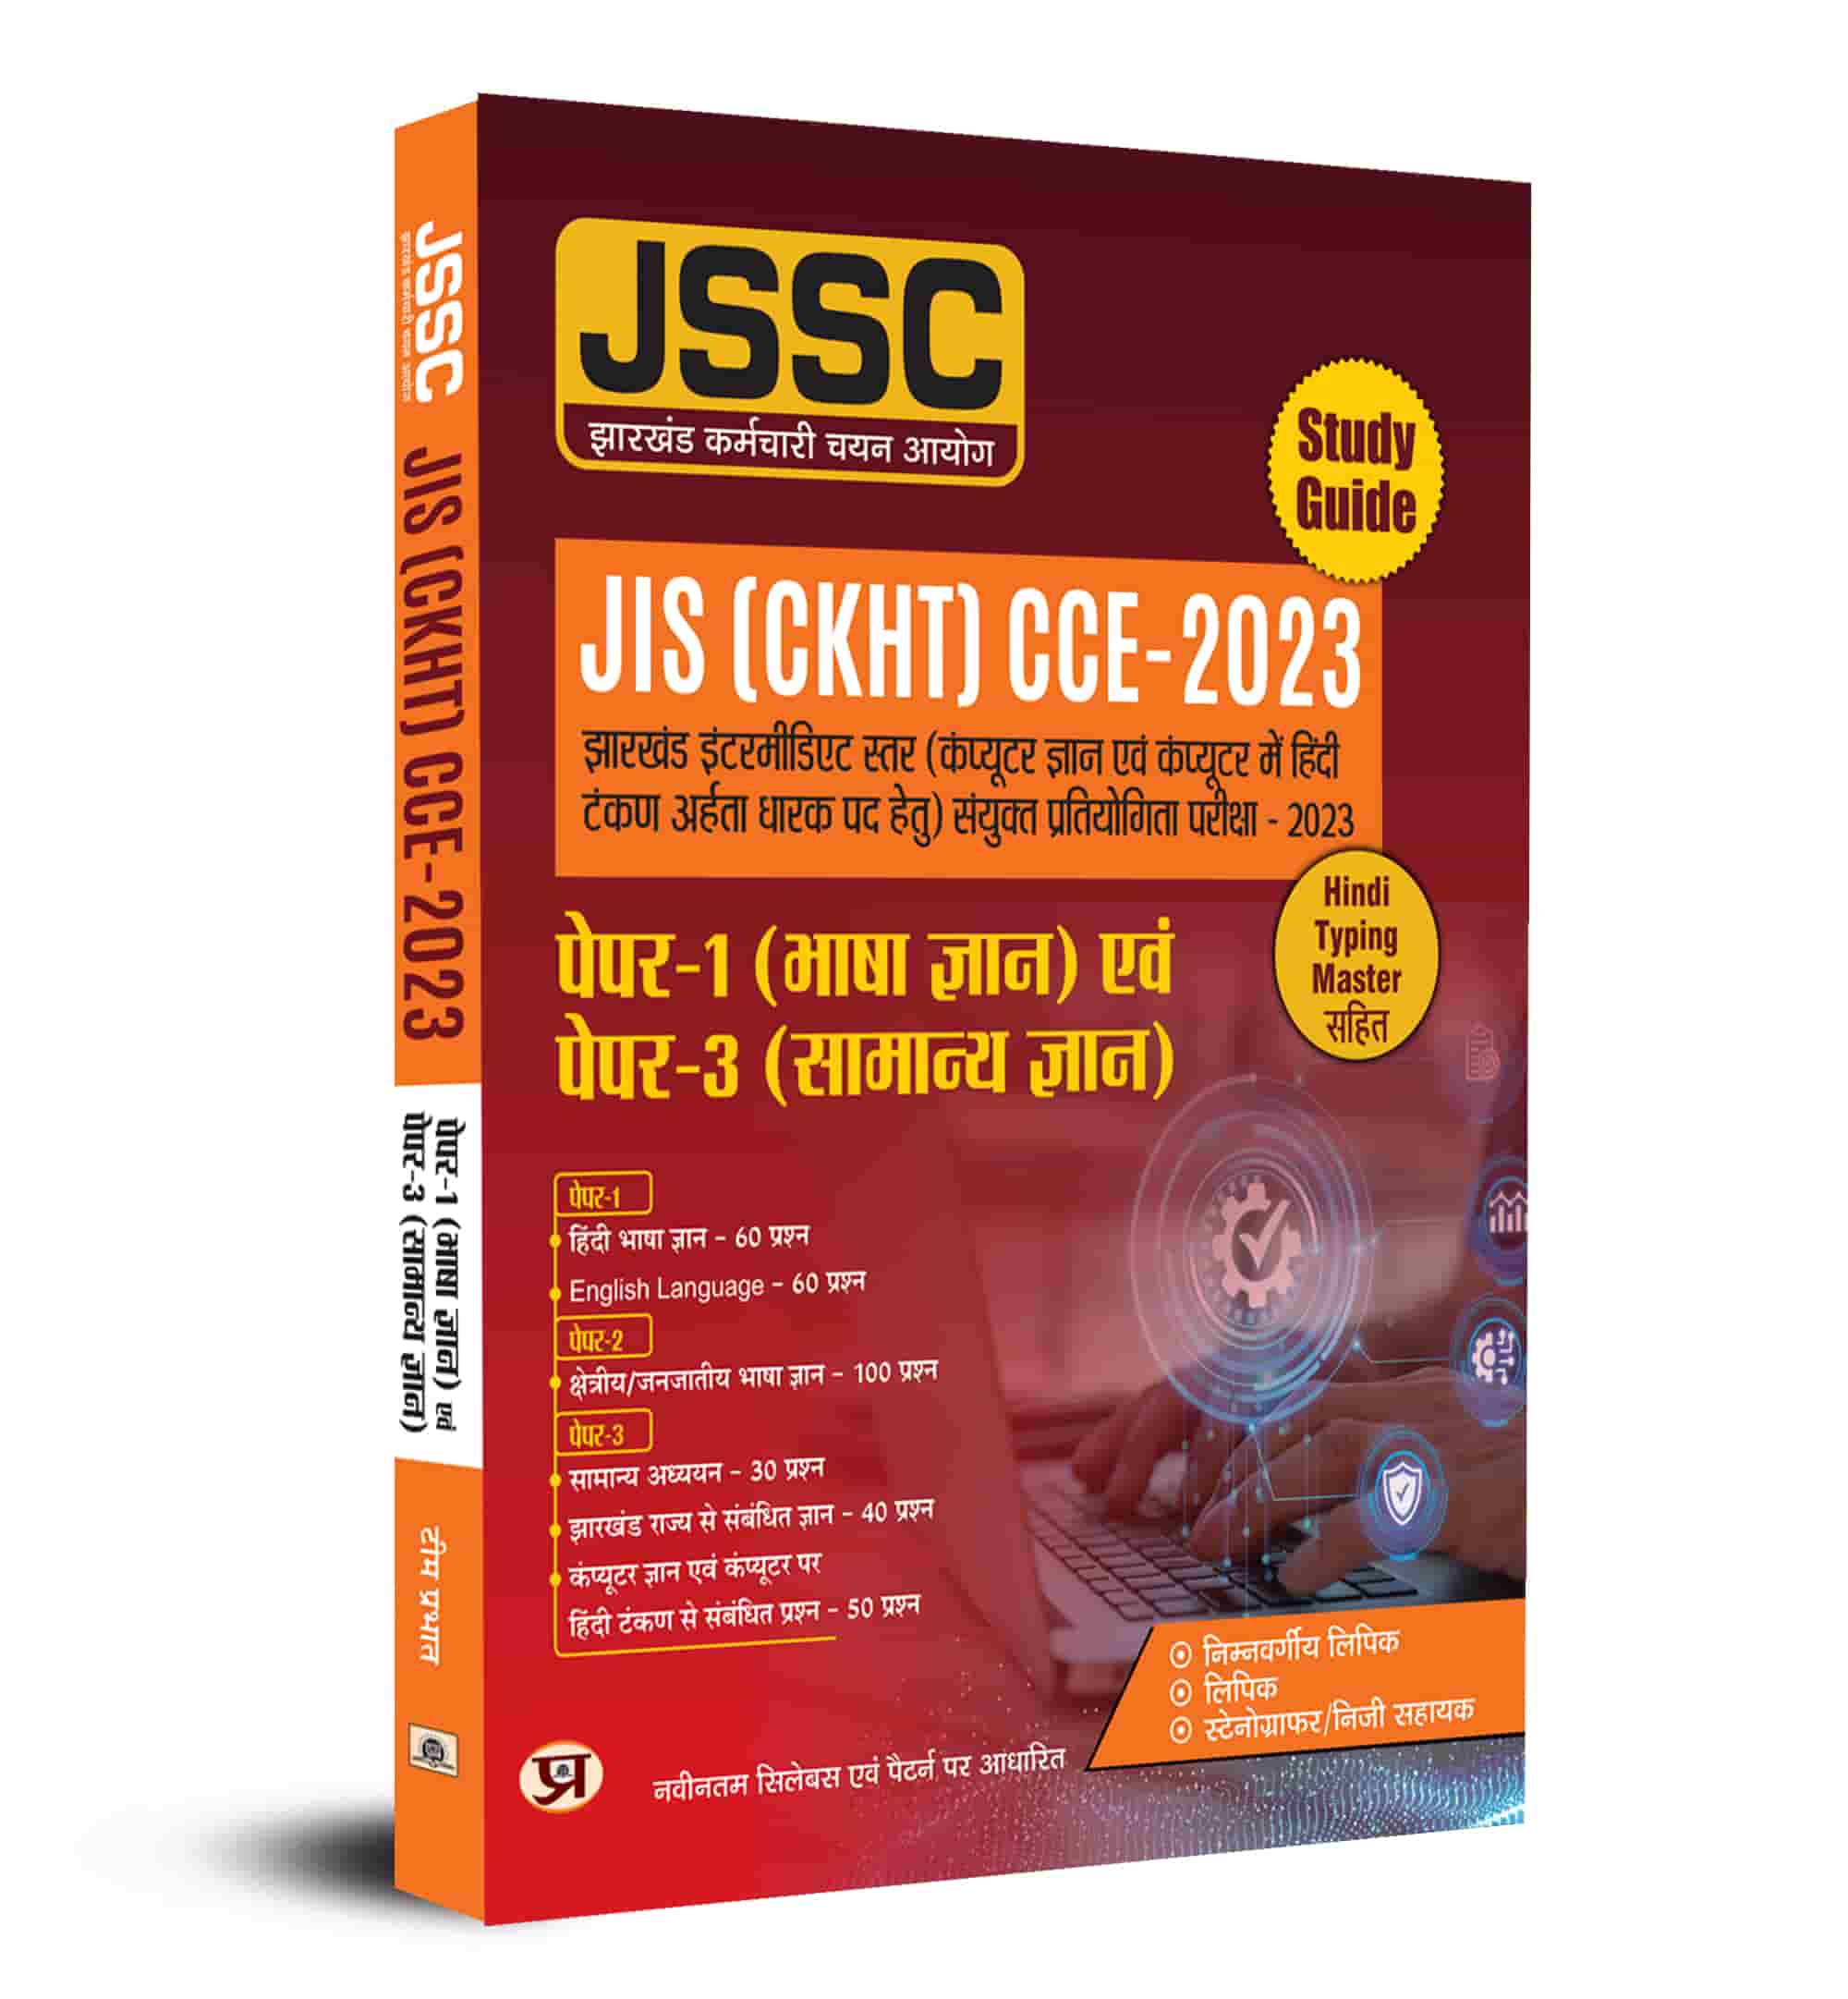 JSSC JIS (CKHT) 2023 for Paper-1 (Language Hindi & English) & Paper-3 ... 